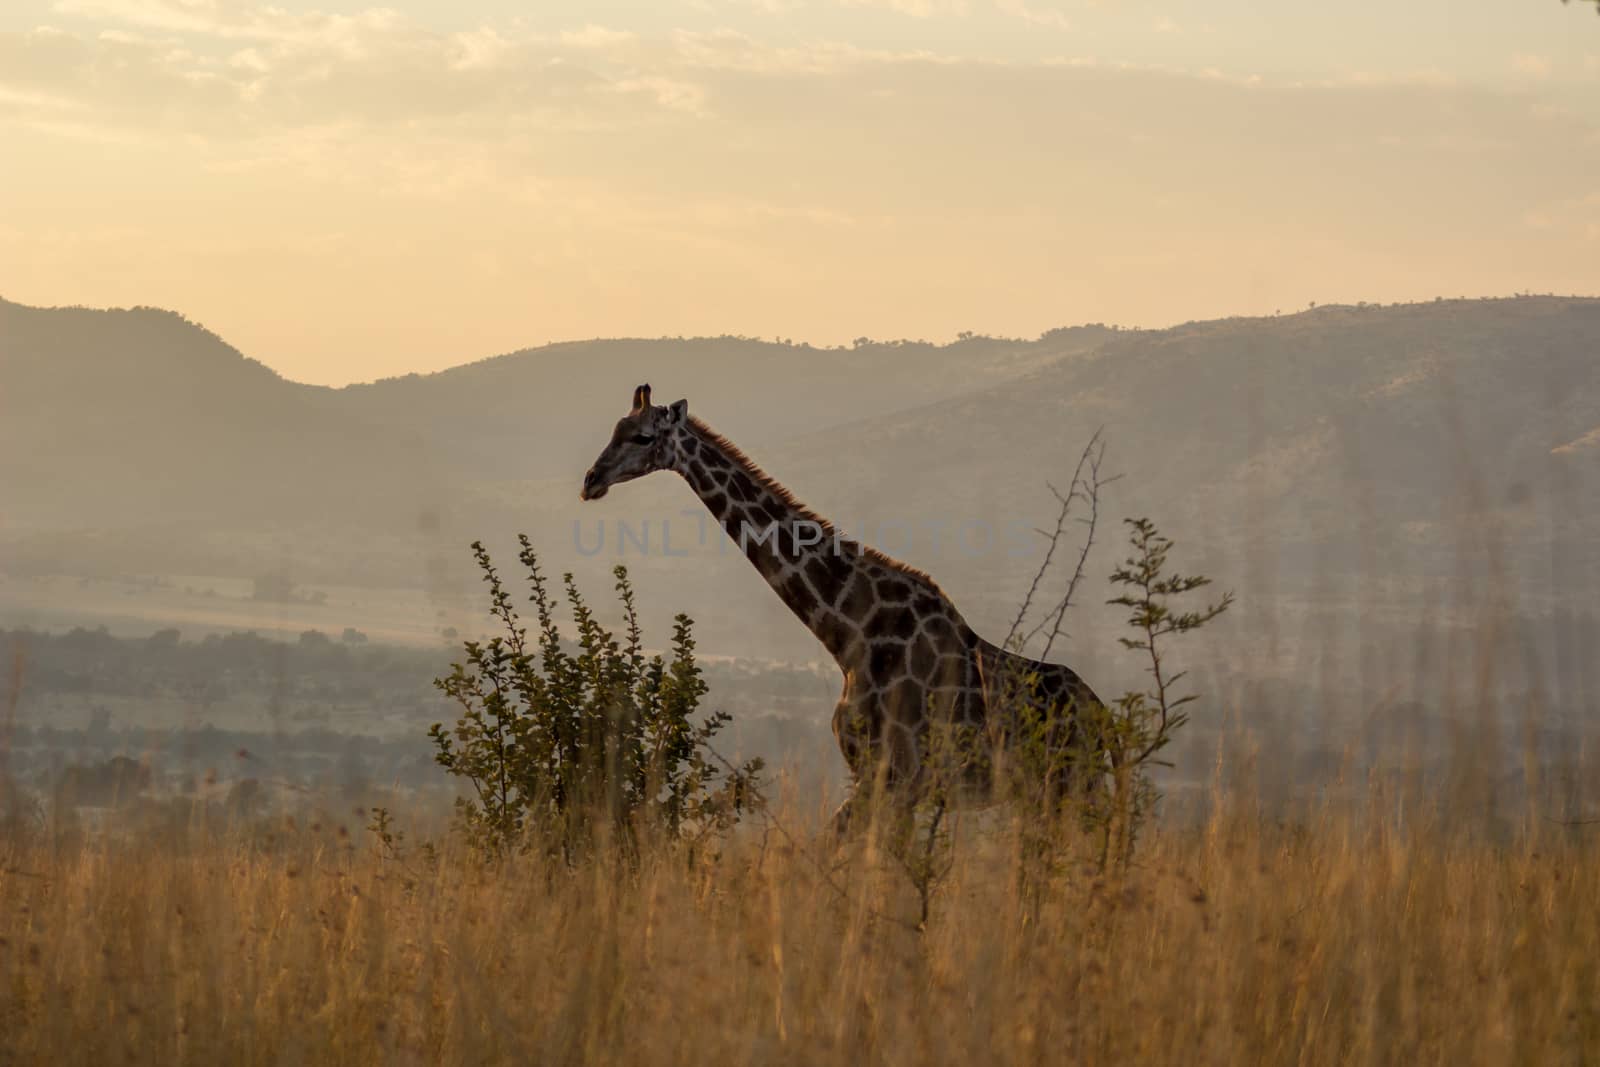 Giraffe in the morning by RiaanAlbrecht